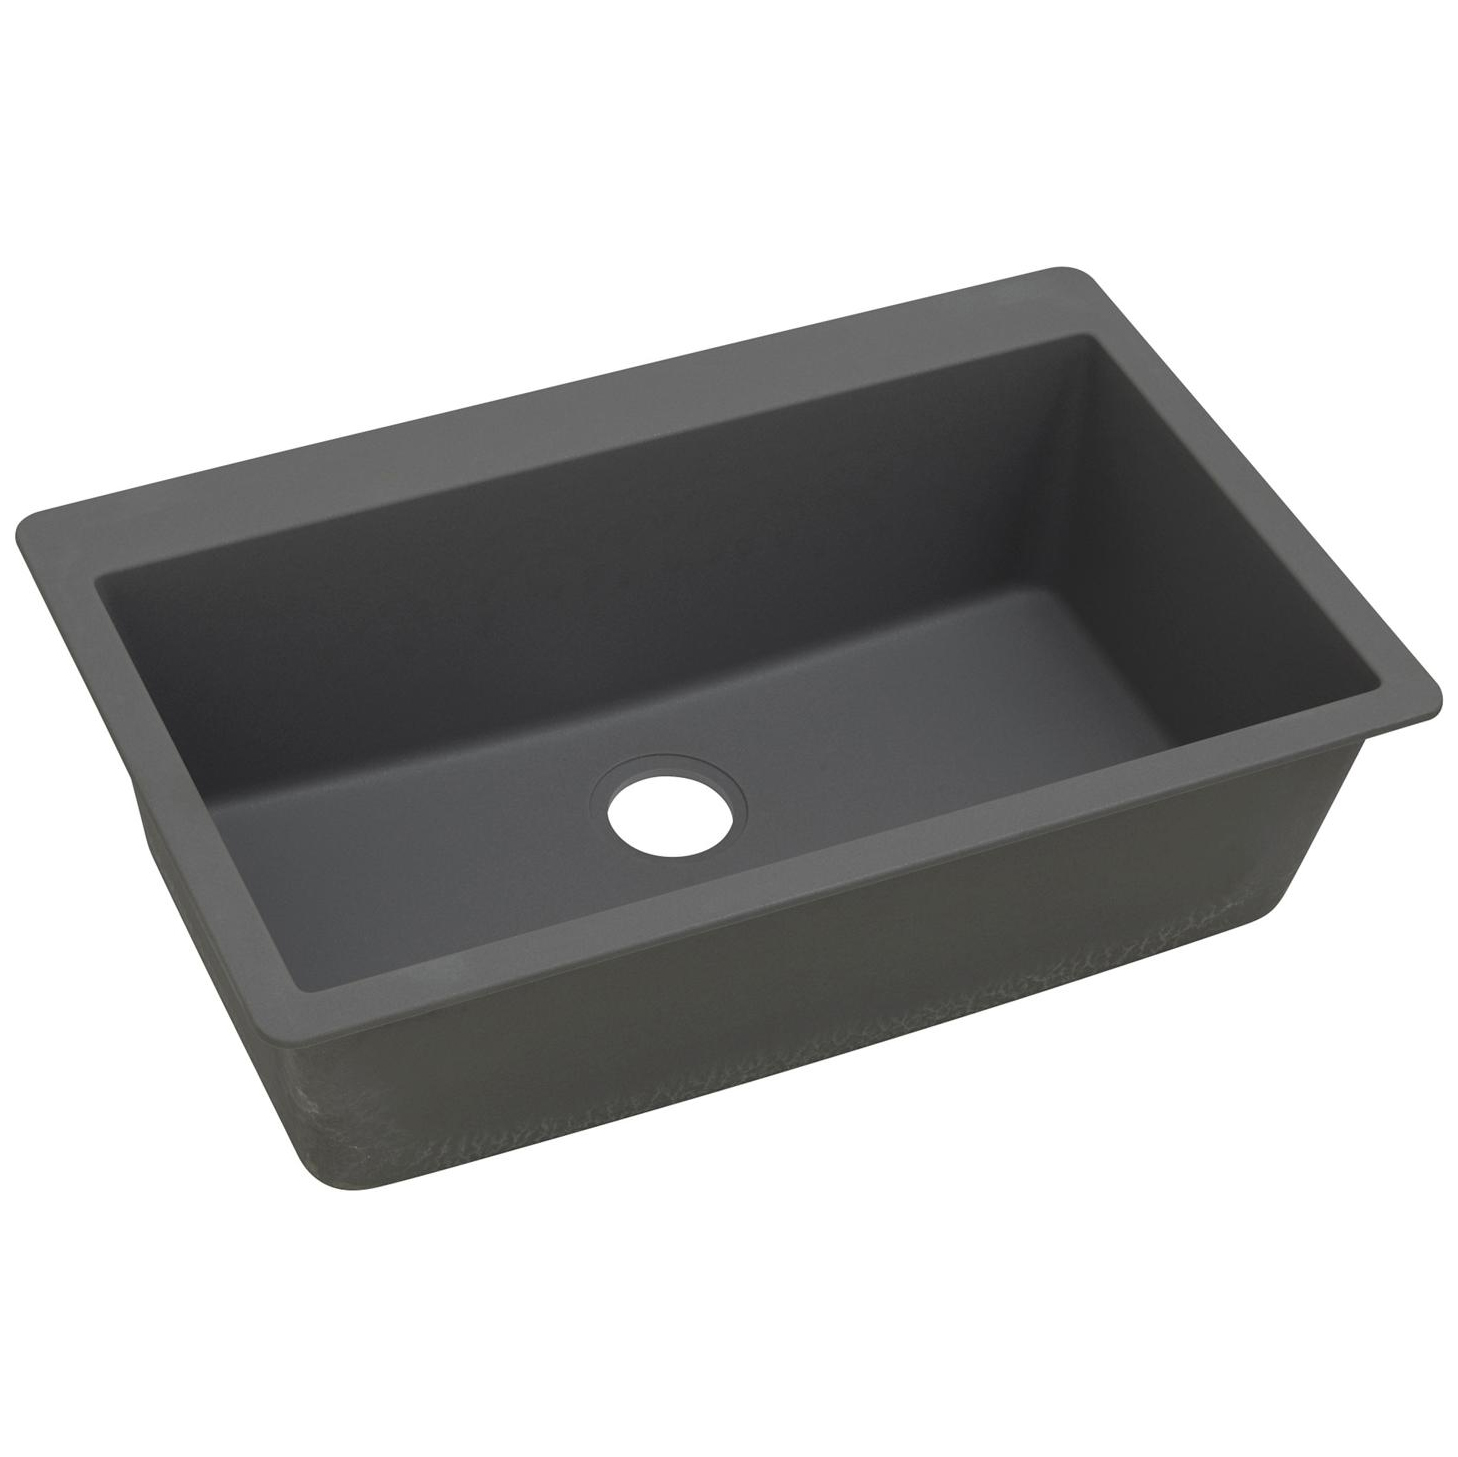 Quartz Classic 33x20-7/8x9-7/16" Single Bowl Sink, Dusk Gray